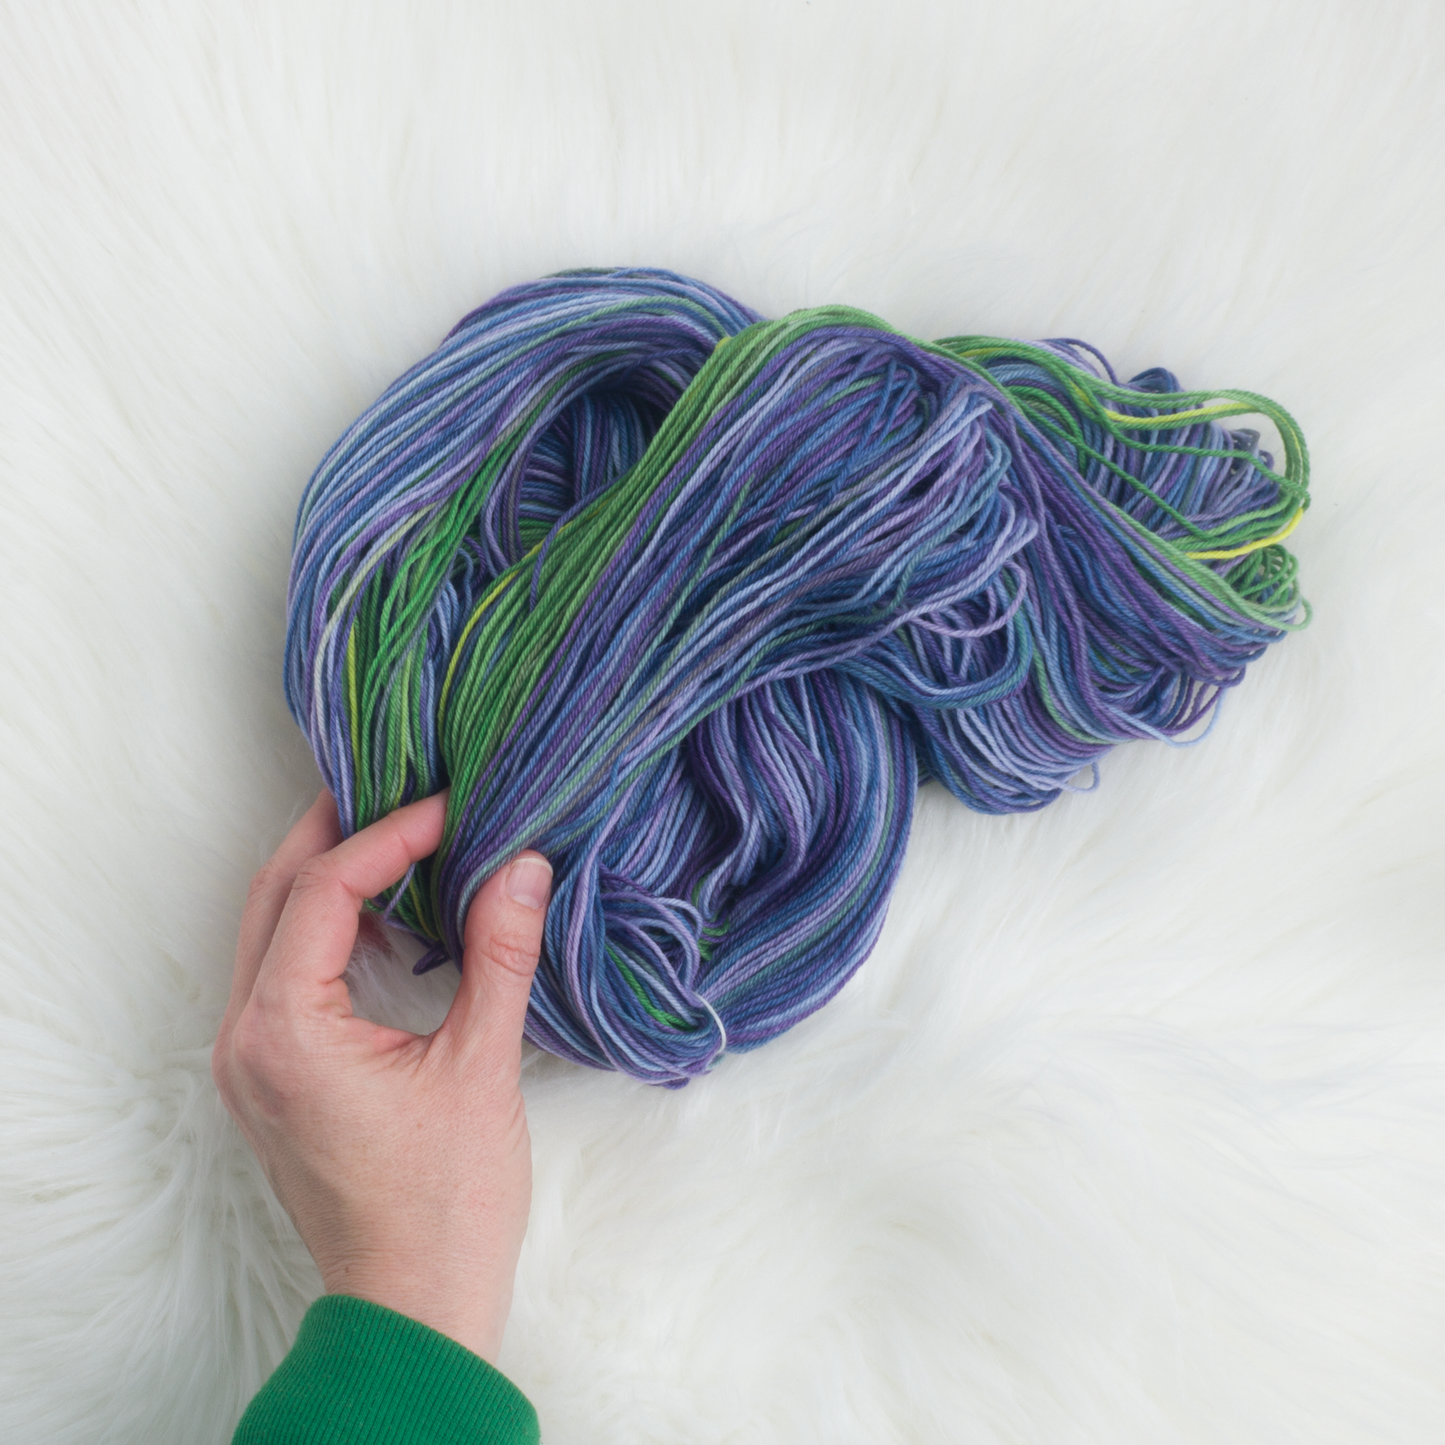 Violets February birth month sock yarn gauge dye works knitting crochet